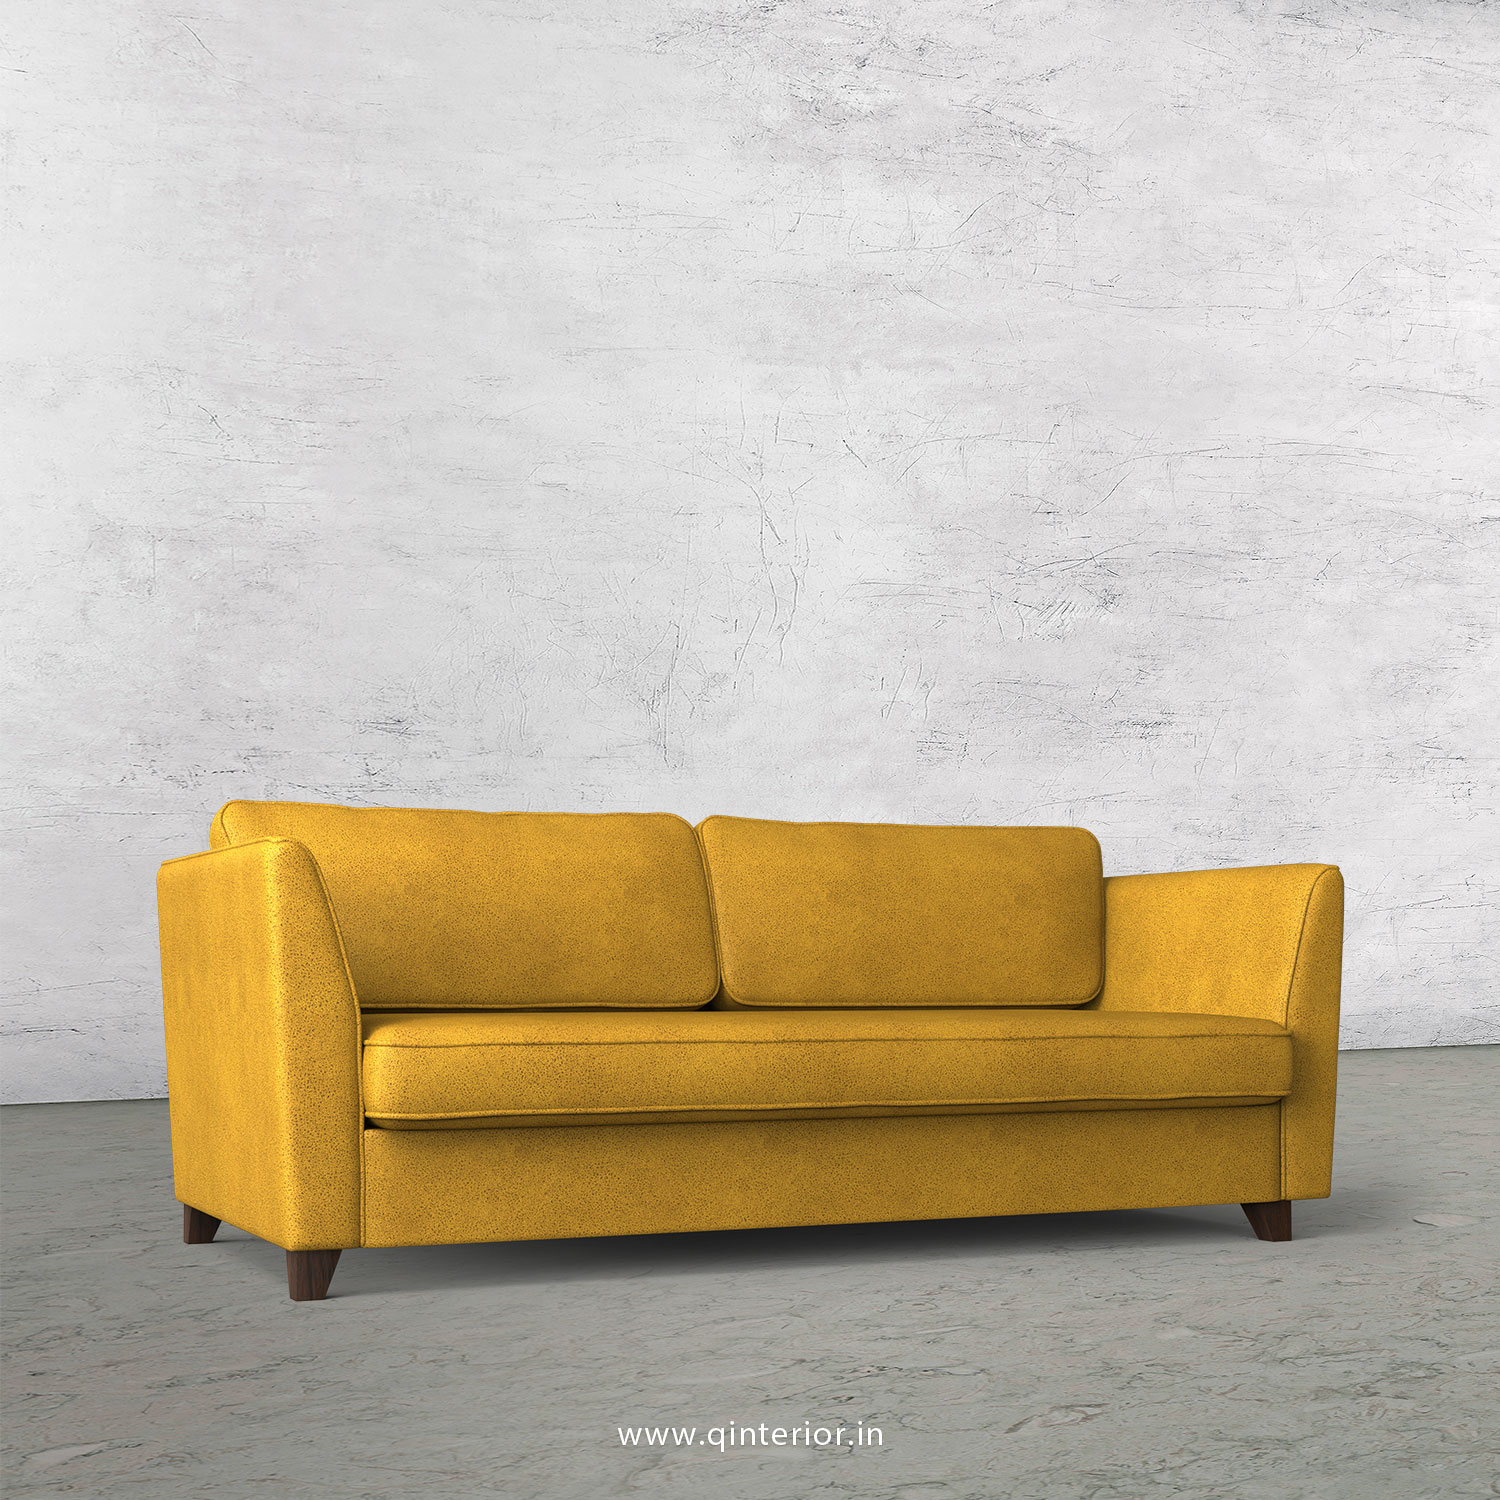 KINGSTONE 3 Seater Sofa in Fab Leather Fabric - SFA004 FL18